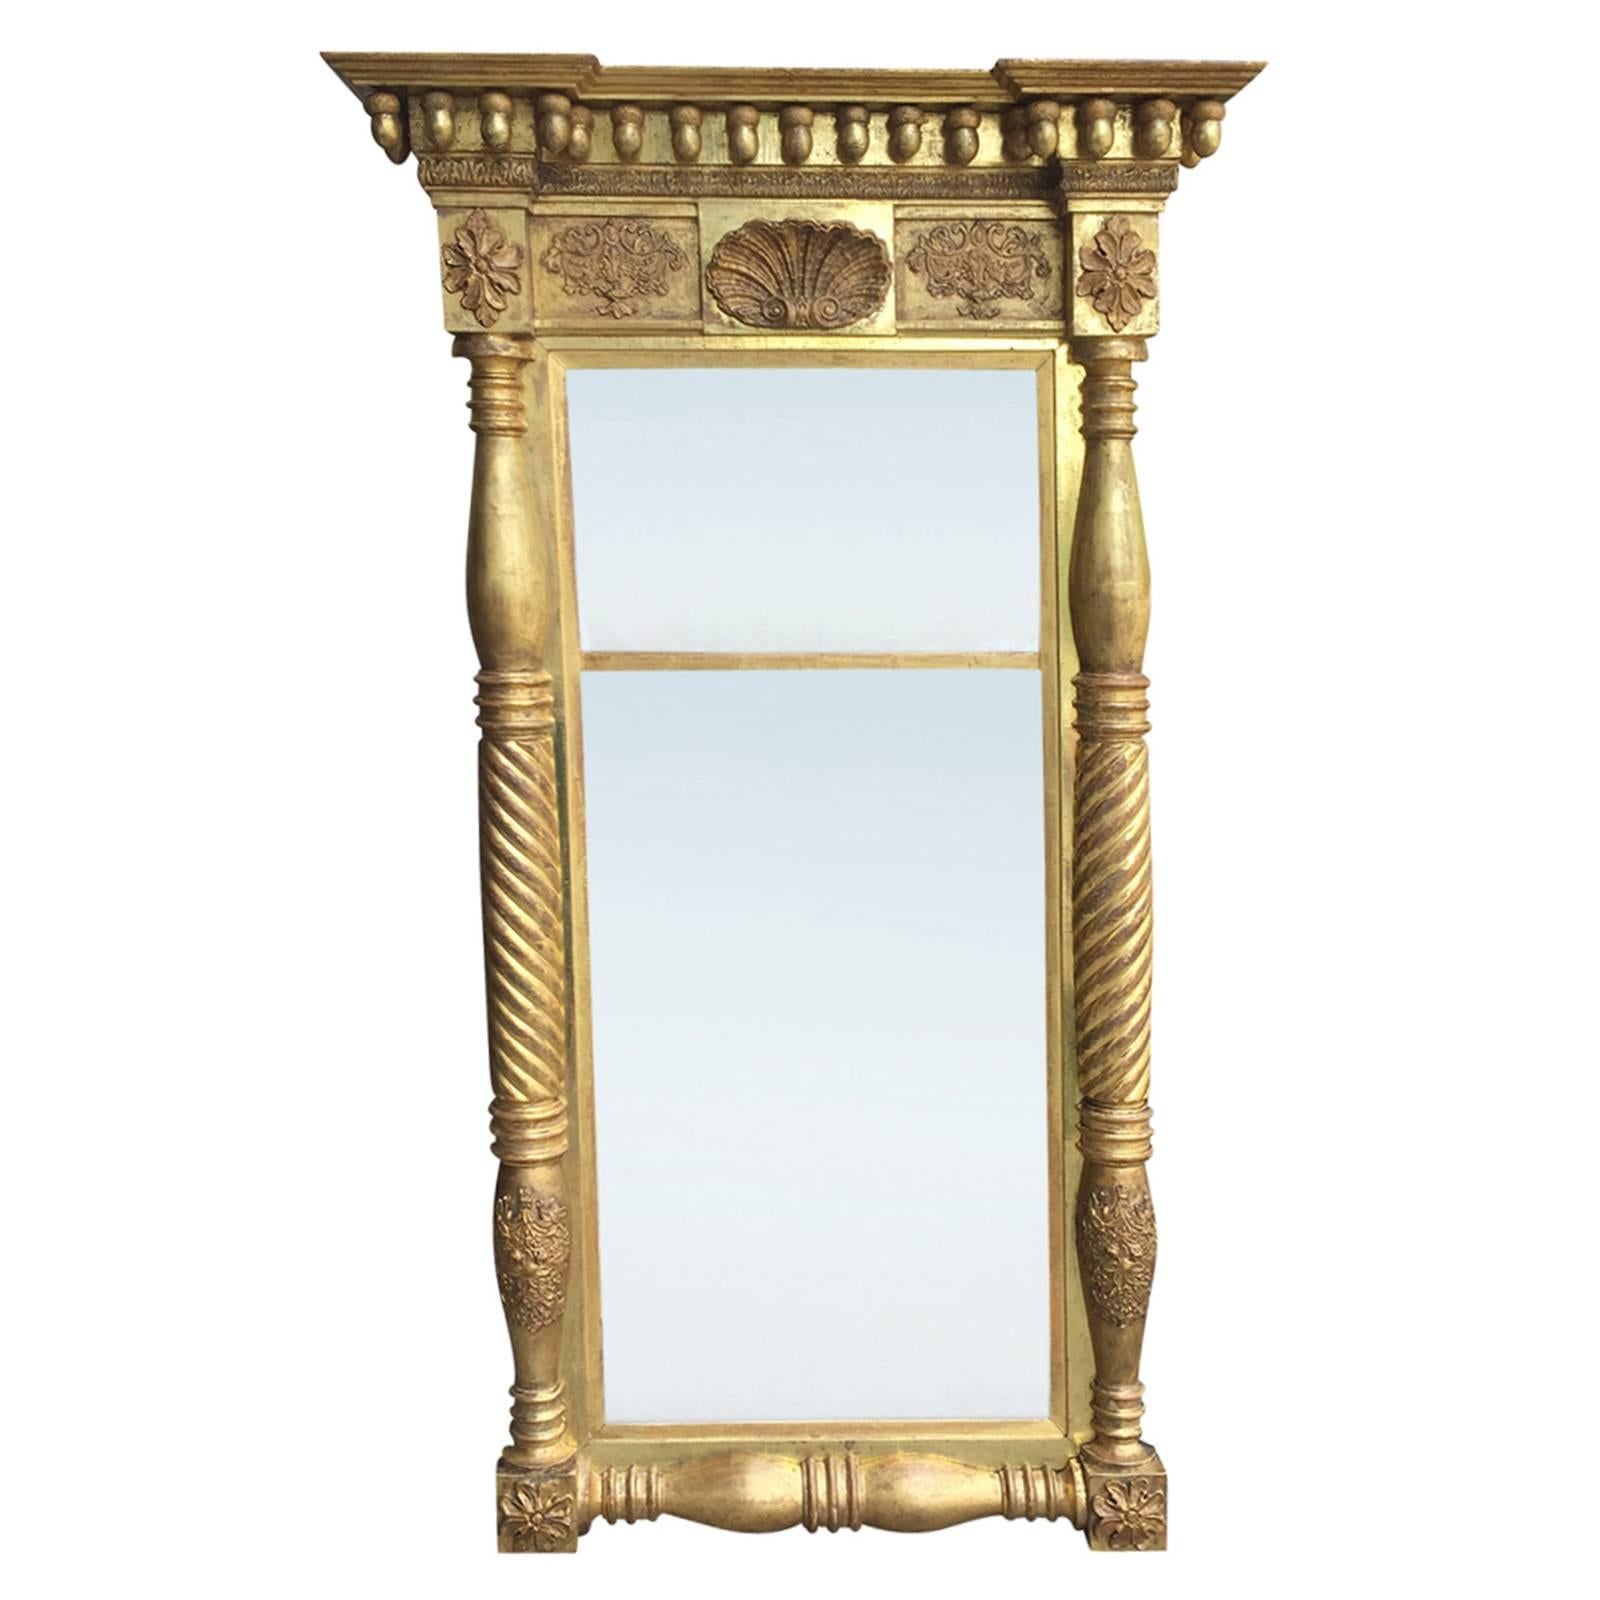 19th Century circa 1840 American Empire Giltwood Pier Mirror, Acorn & Shell